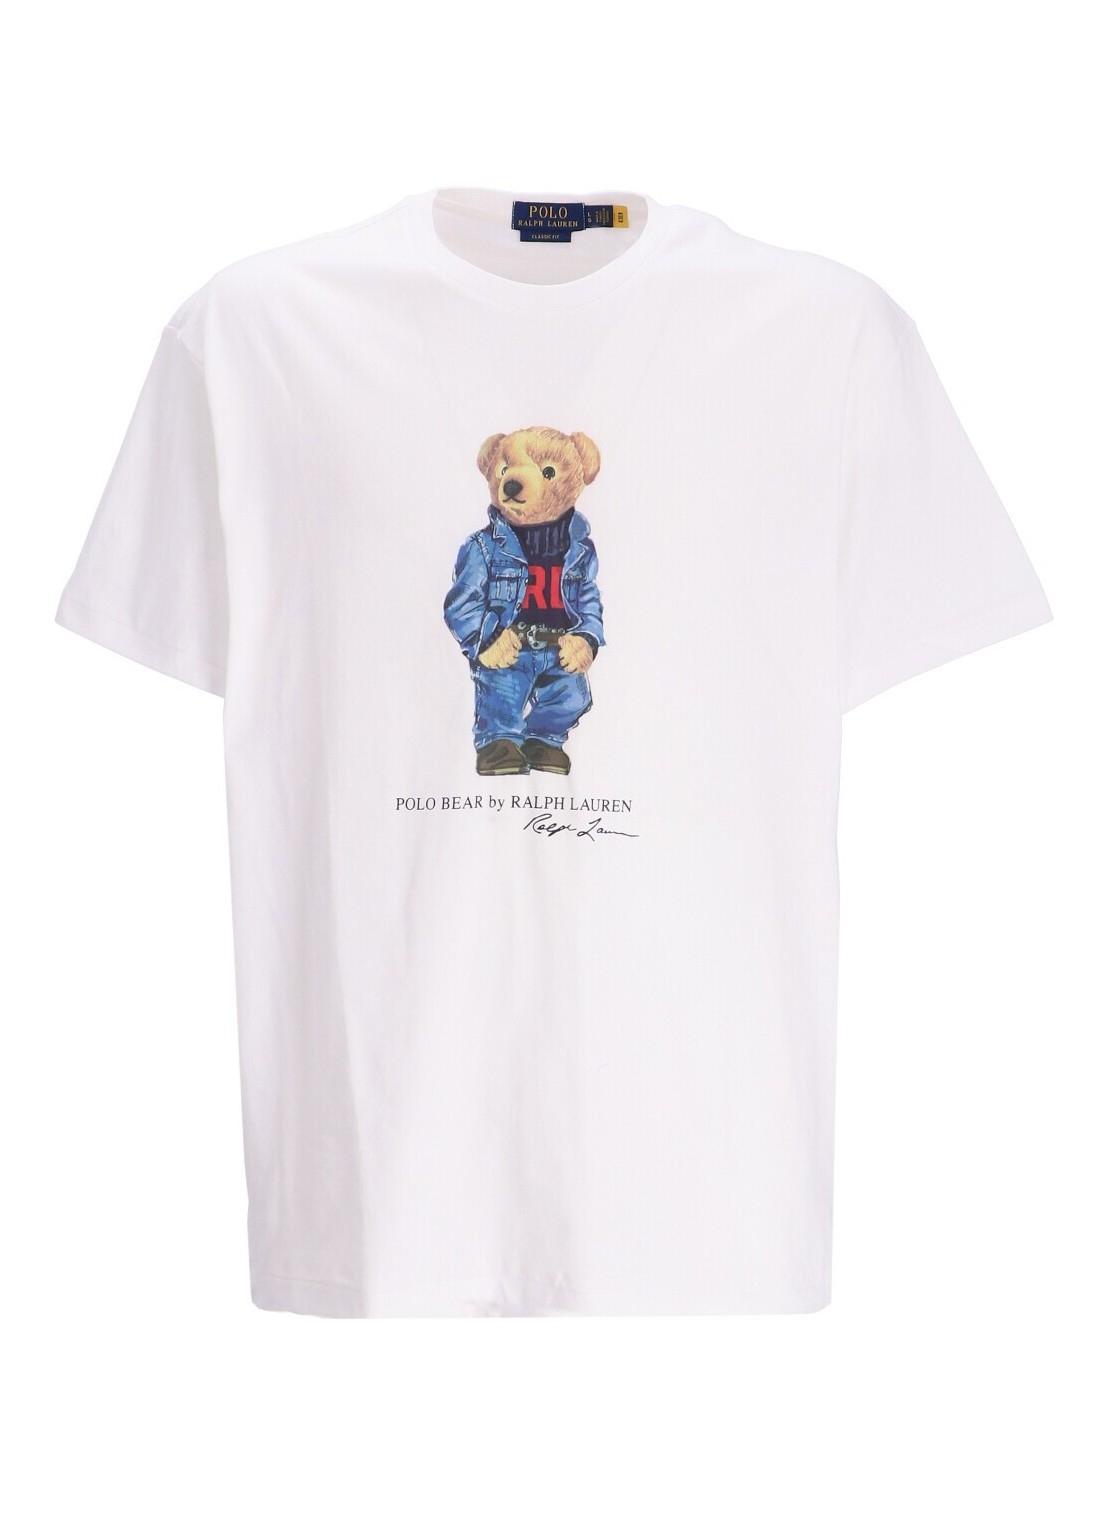 Camiseta polo ralph lauren t-shirt man sscnclsm1-short sleeve-t-shirt 710854497011 fa 22 white denim